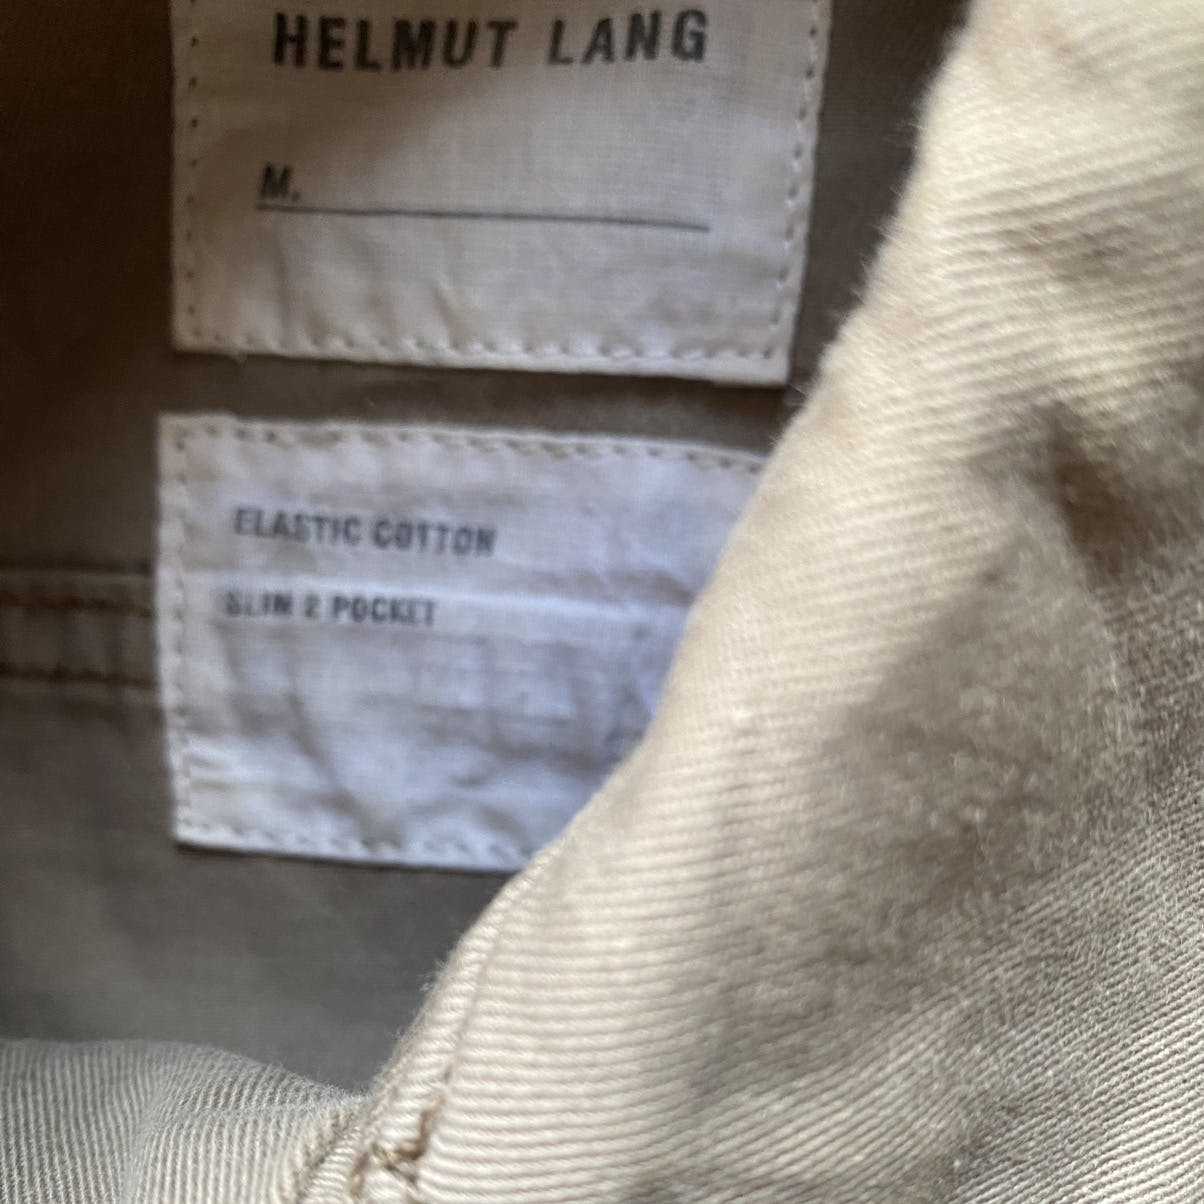 Helmut Lang Archive Elastic Denim Slim Two Pocket - 4